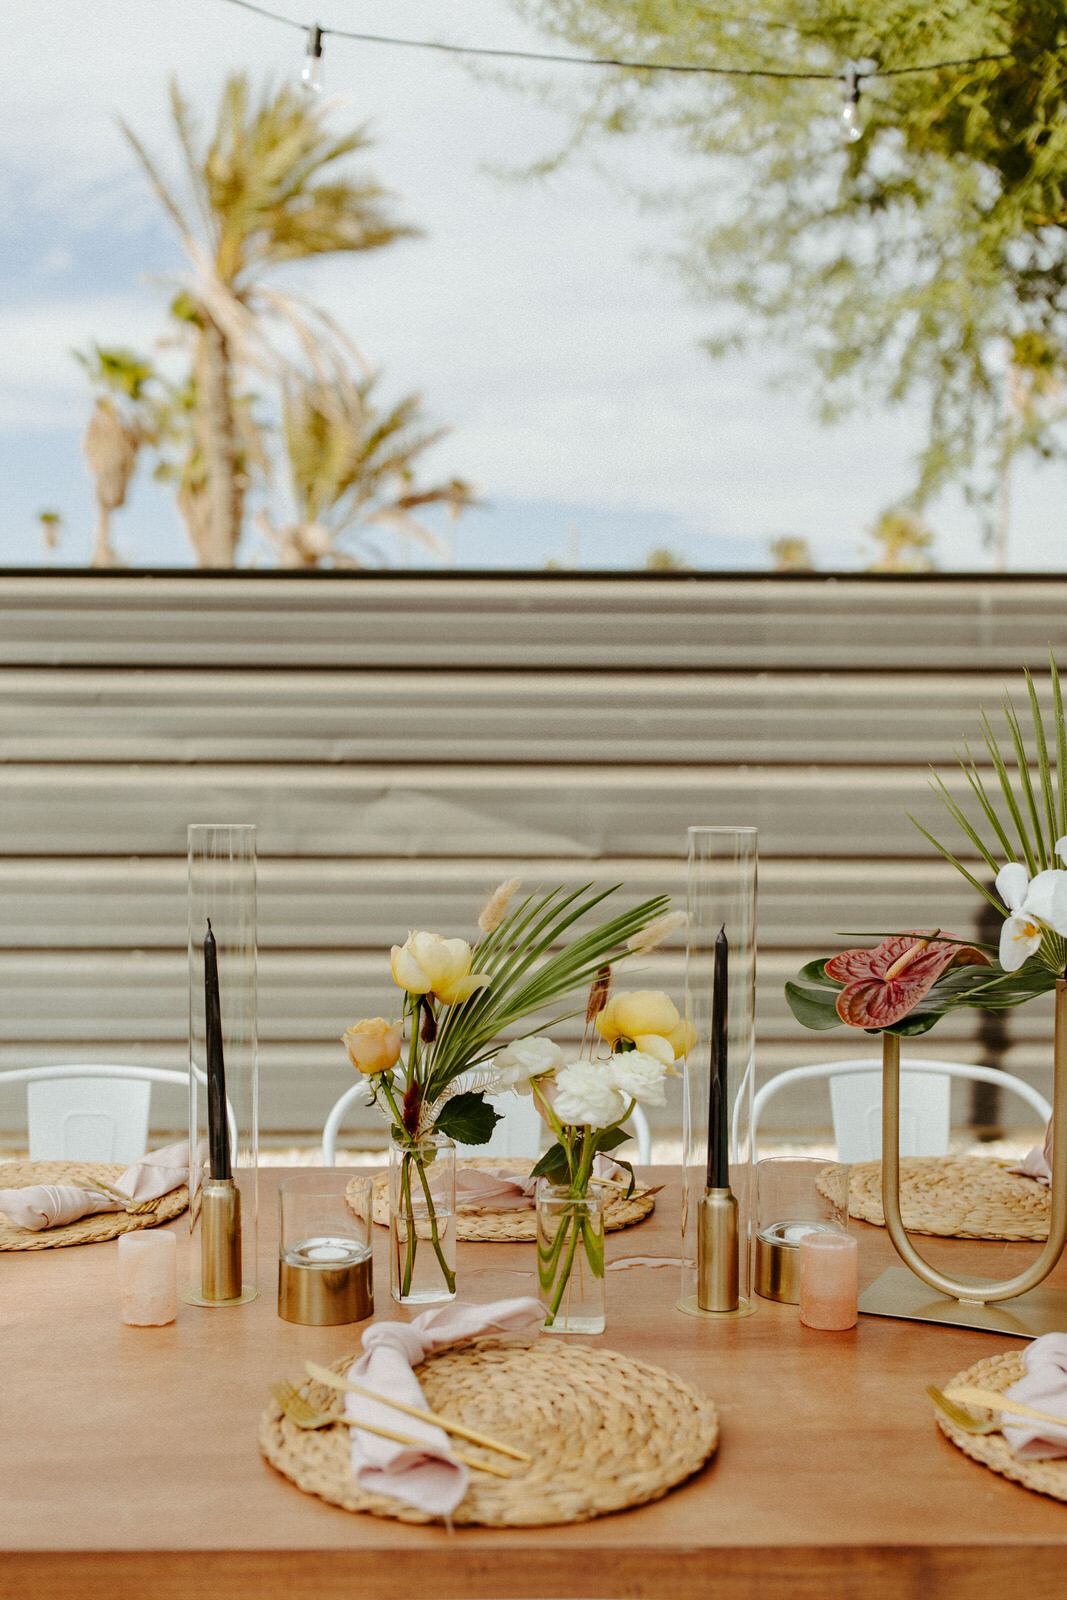 Brianna-Broyles-Photography-COVID-Backyard-Wedding-Palm-Springs-Reception-5.jpg